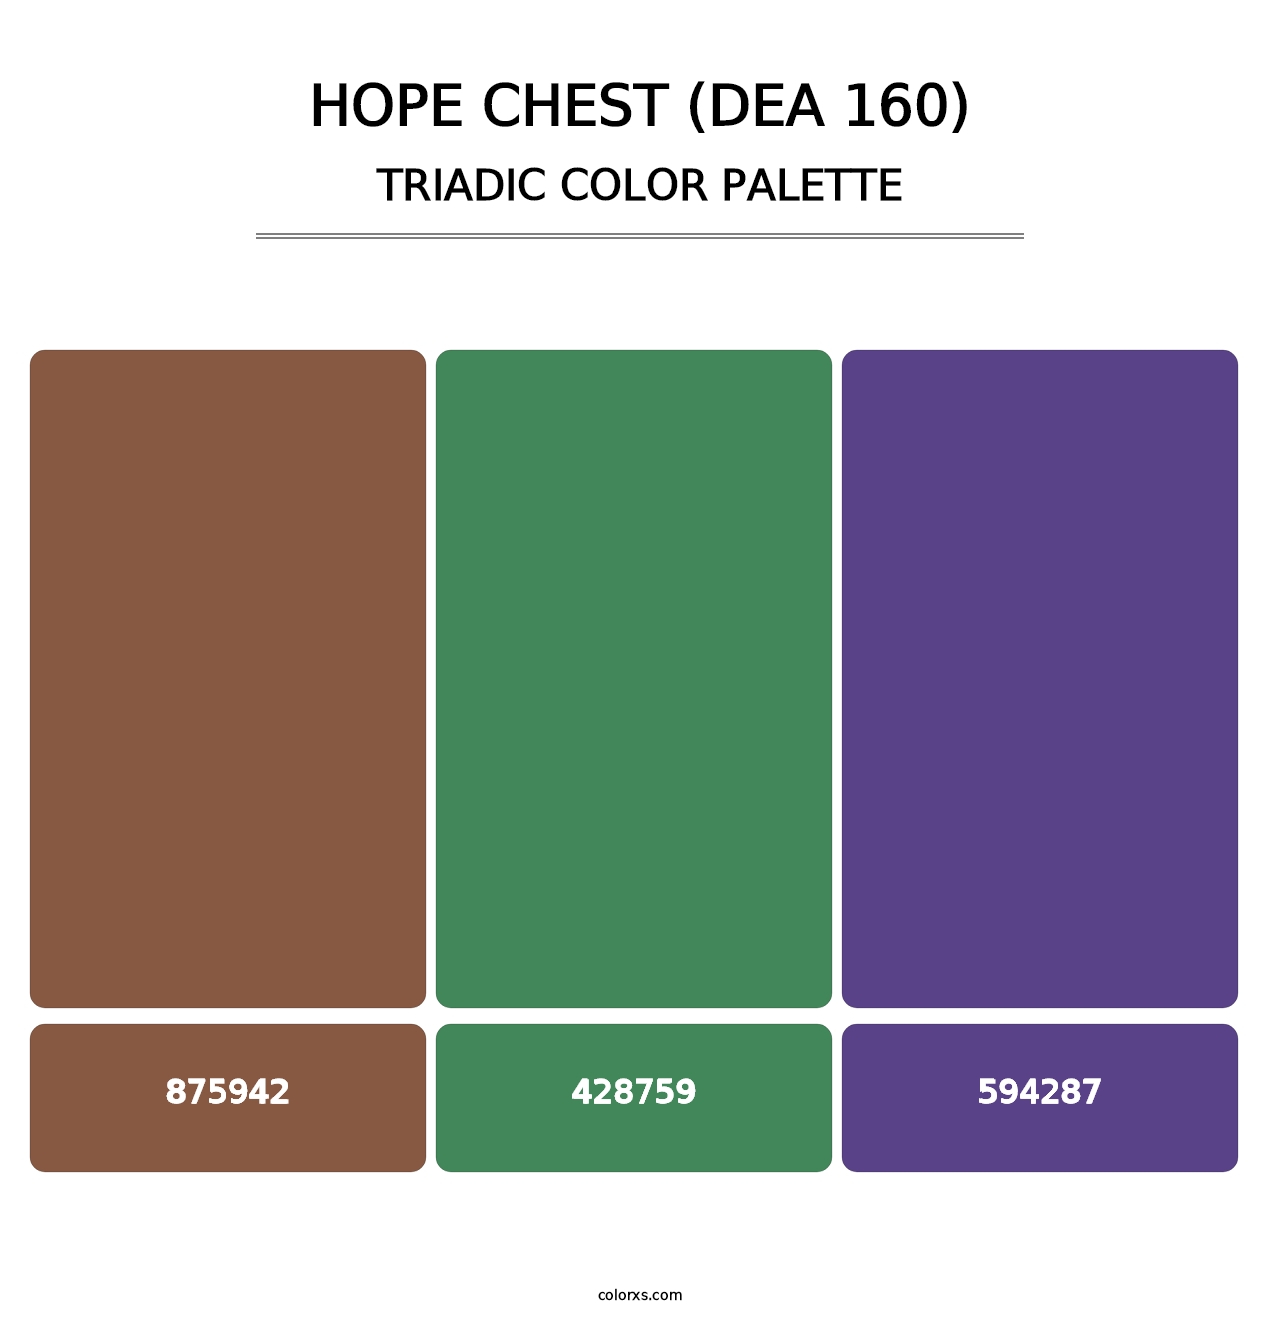 Hope Chest (DEA 160) - Triadic Color Palette